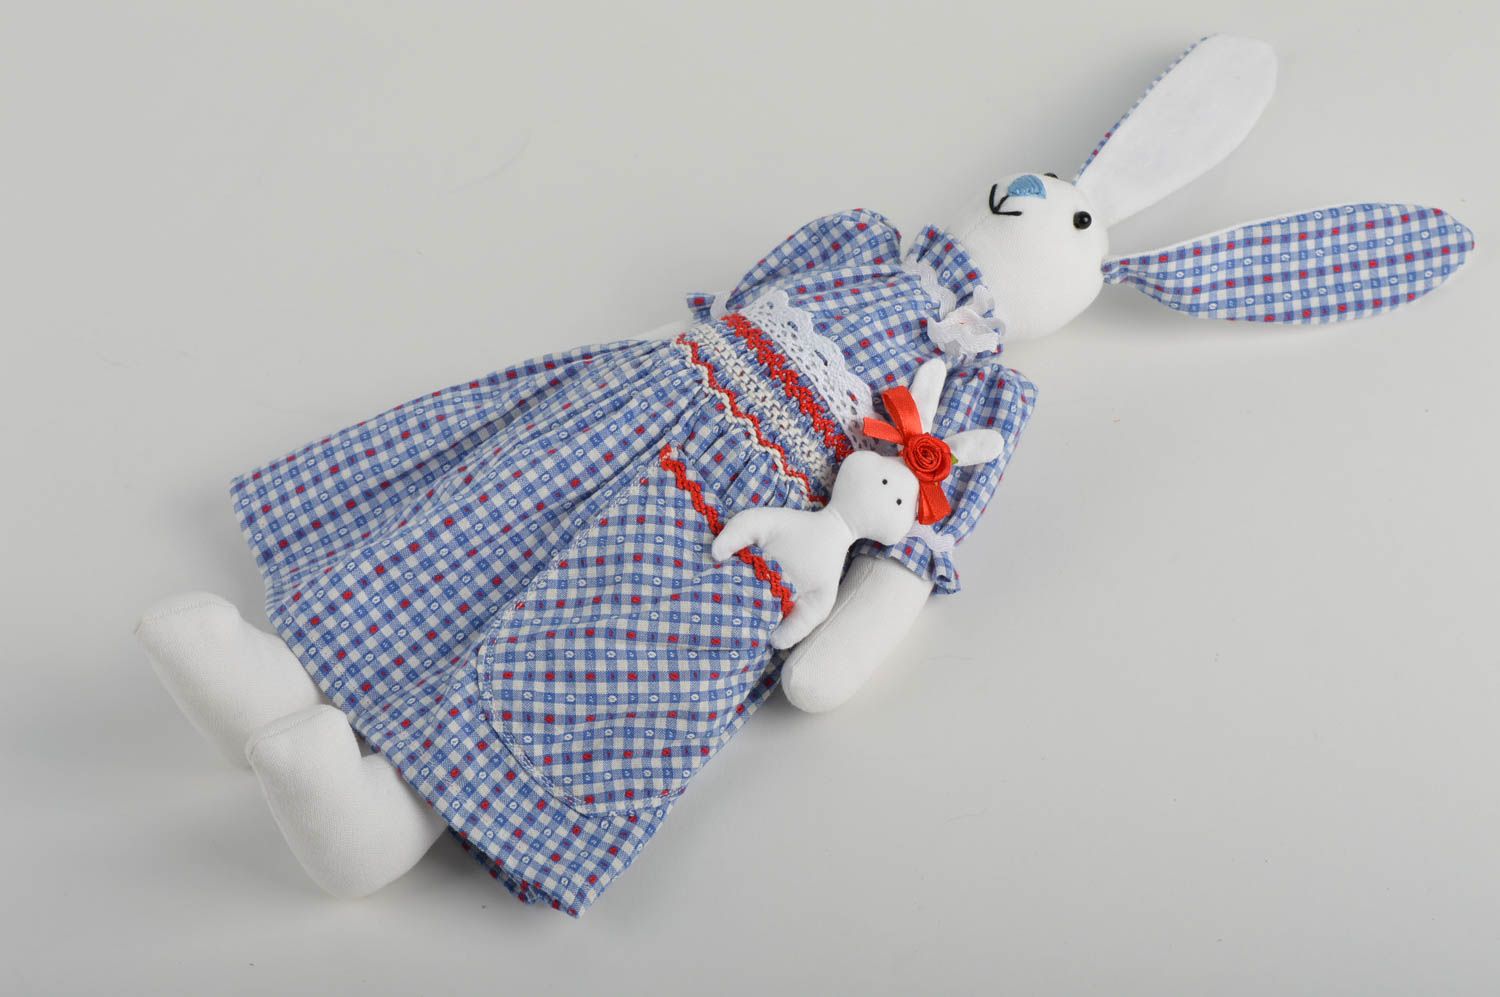 Handmade Deko ausgefallenes Spielzeug Kuschel Tier Geschenk Idee Hase  foto 2